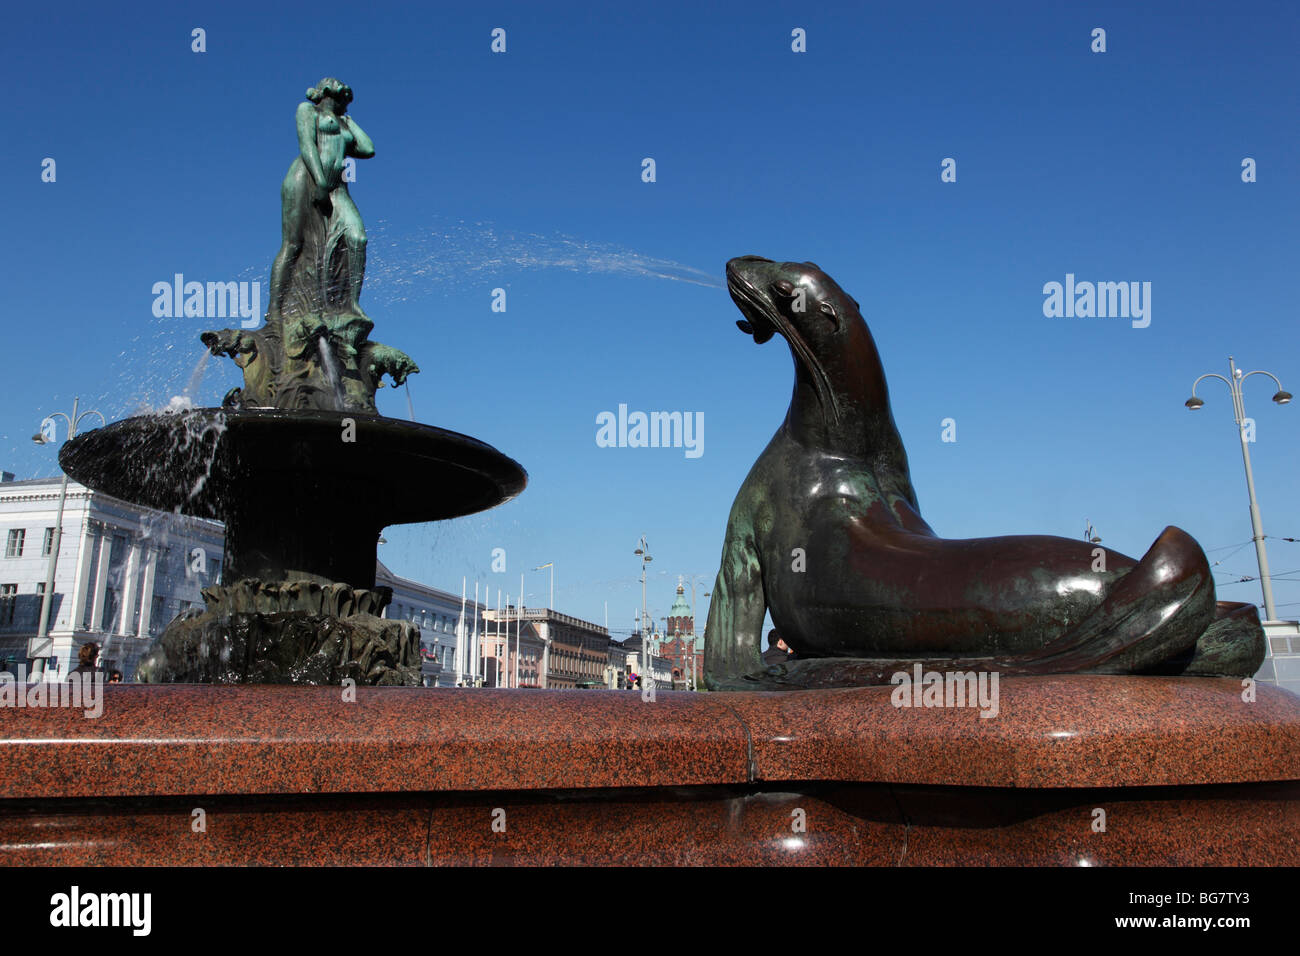 Finnland, Helsinki, Helsingfors, Esplanade Park, Havis Amanda-Brunnen, Brunnen als Symbol für Helsinki, versiegeln schießen Wasser Stockfoto